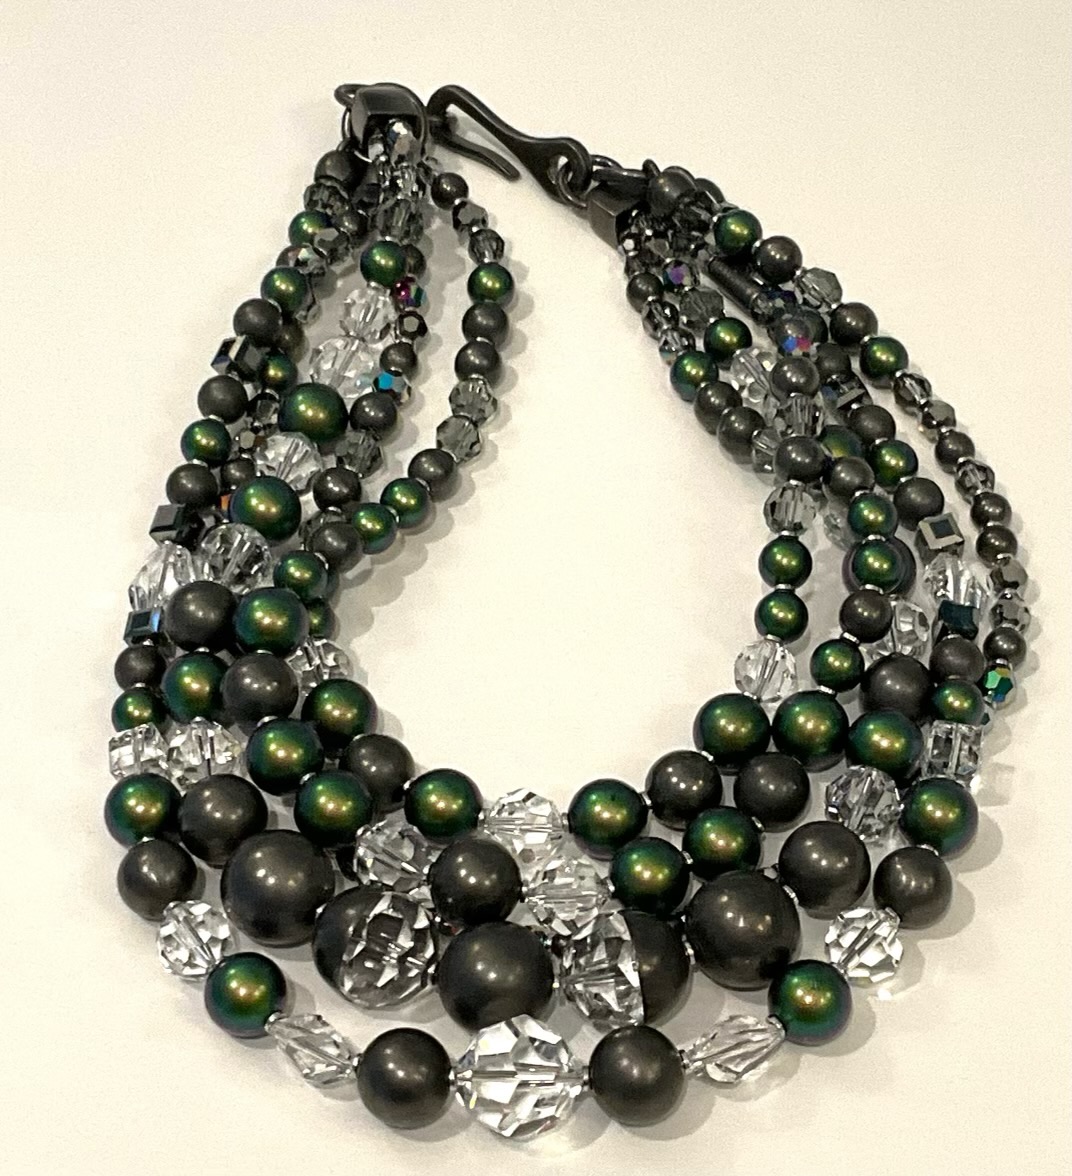 Layered necklace from Atelier Swarovski Image